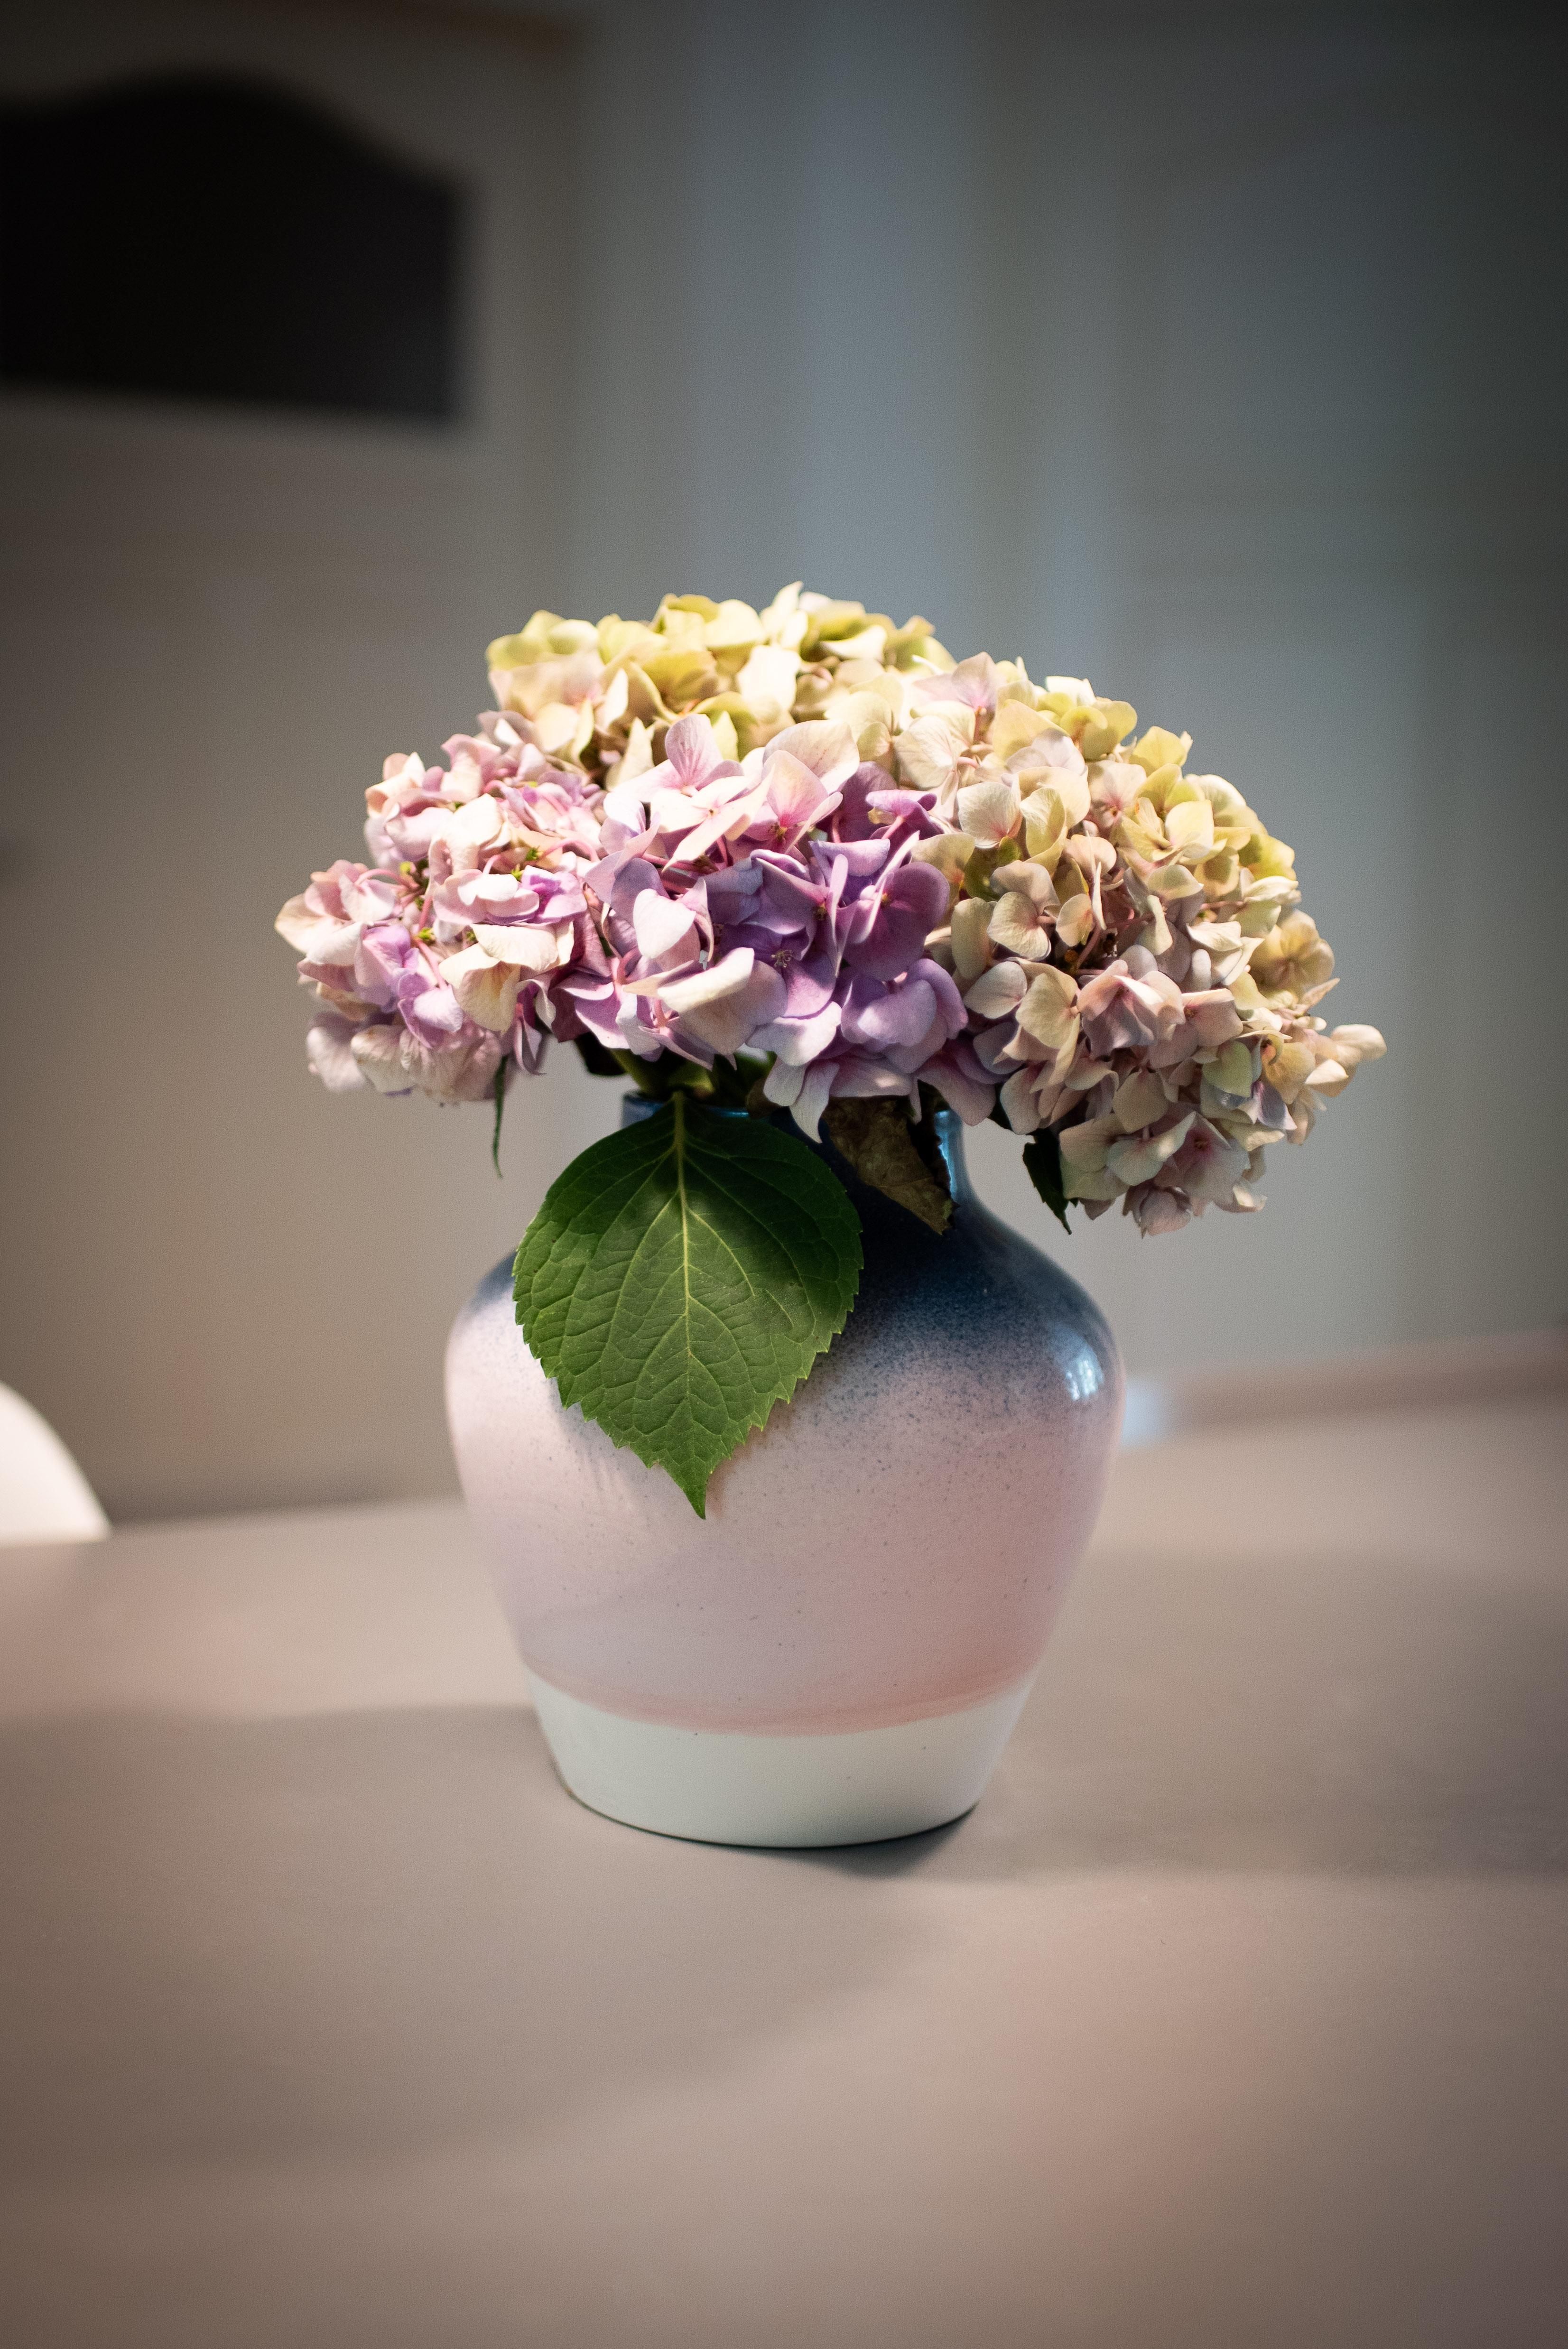 Neue Vase 💜💜💜 #interiorinspo #vase #deko #flowers #newin #interiorstyle